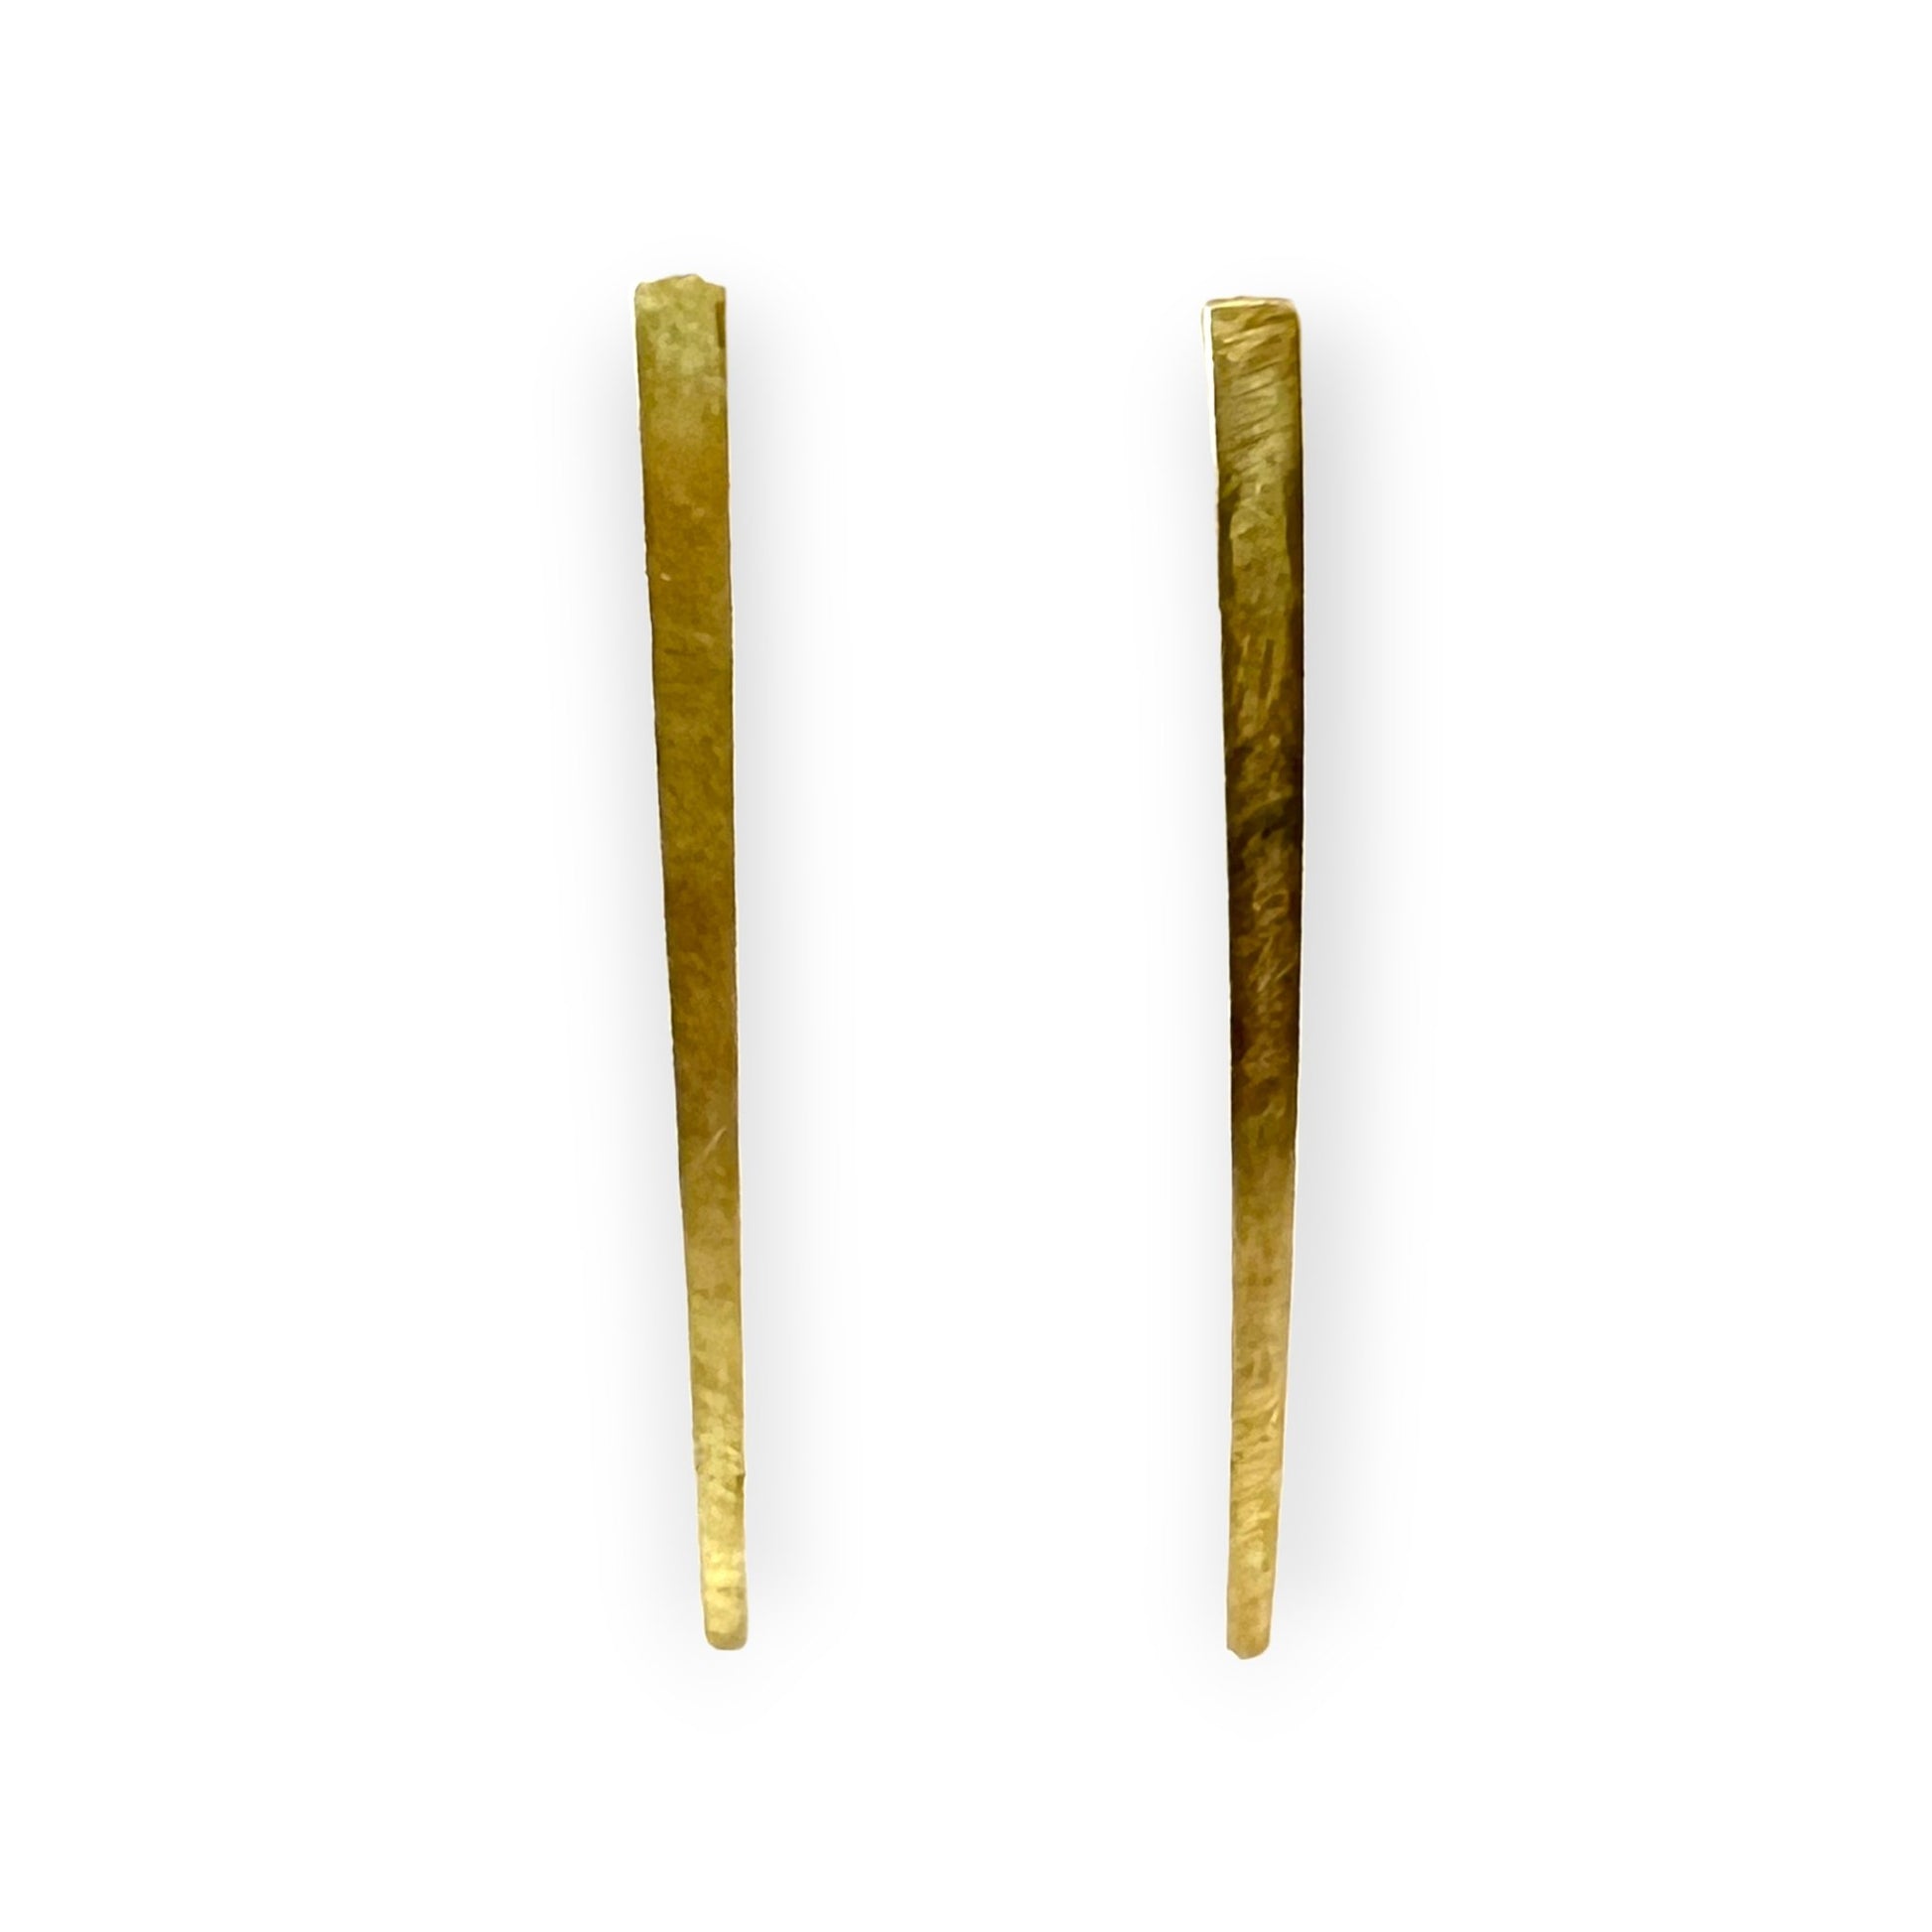 Customizable metal earrings of contrasting strips - Sundara Joon